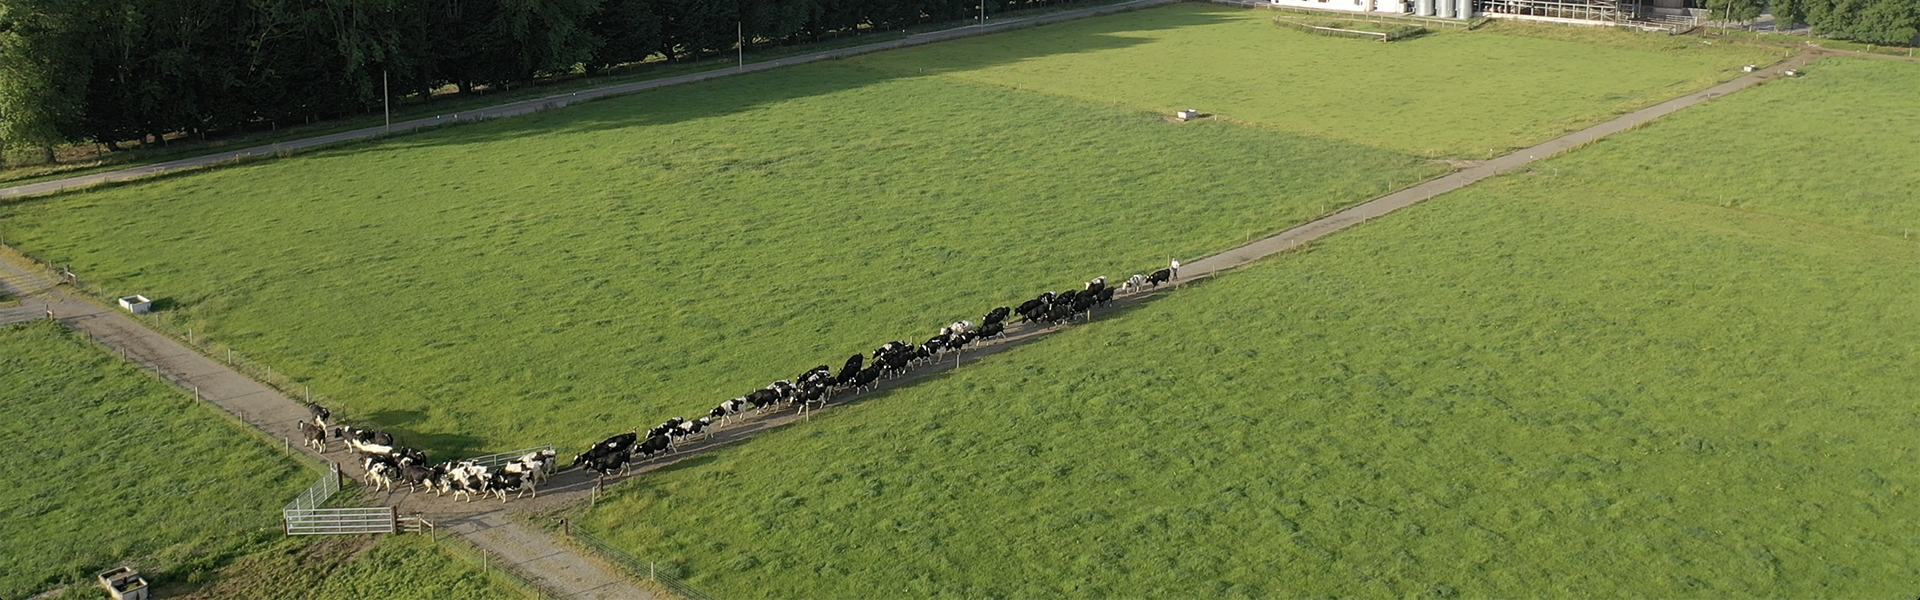 cows crossing a field